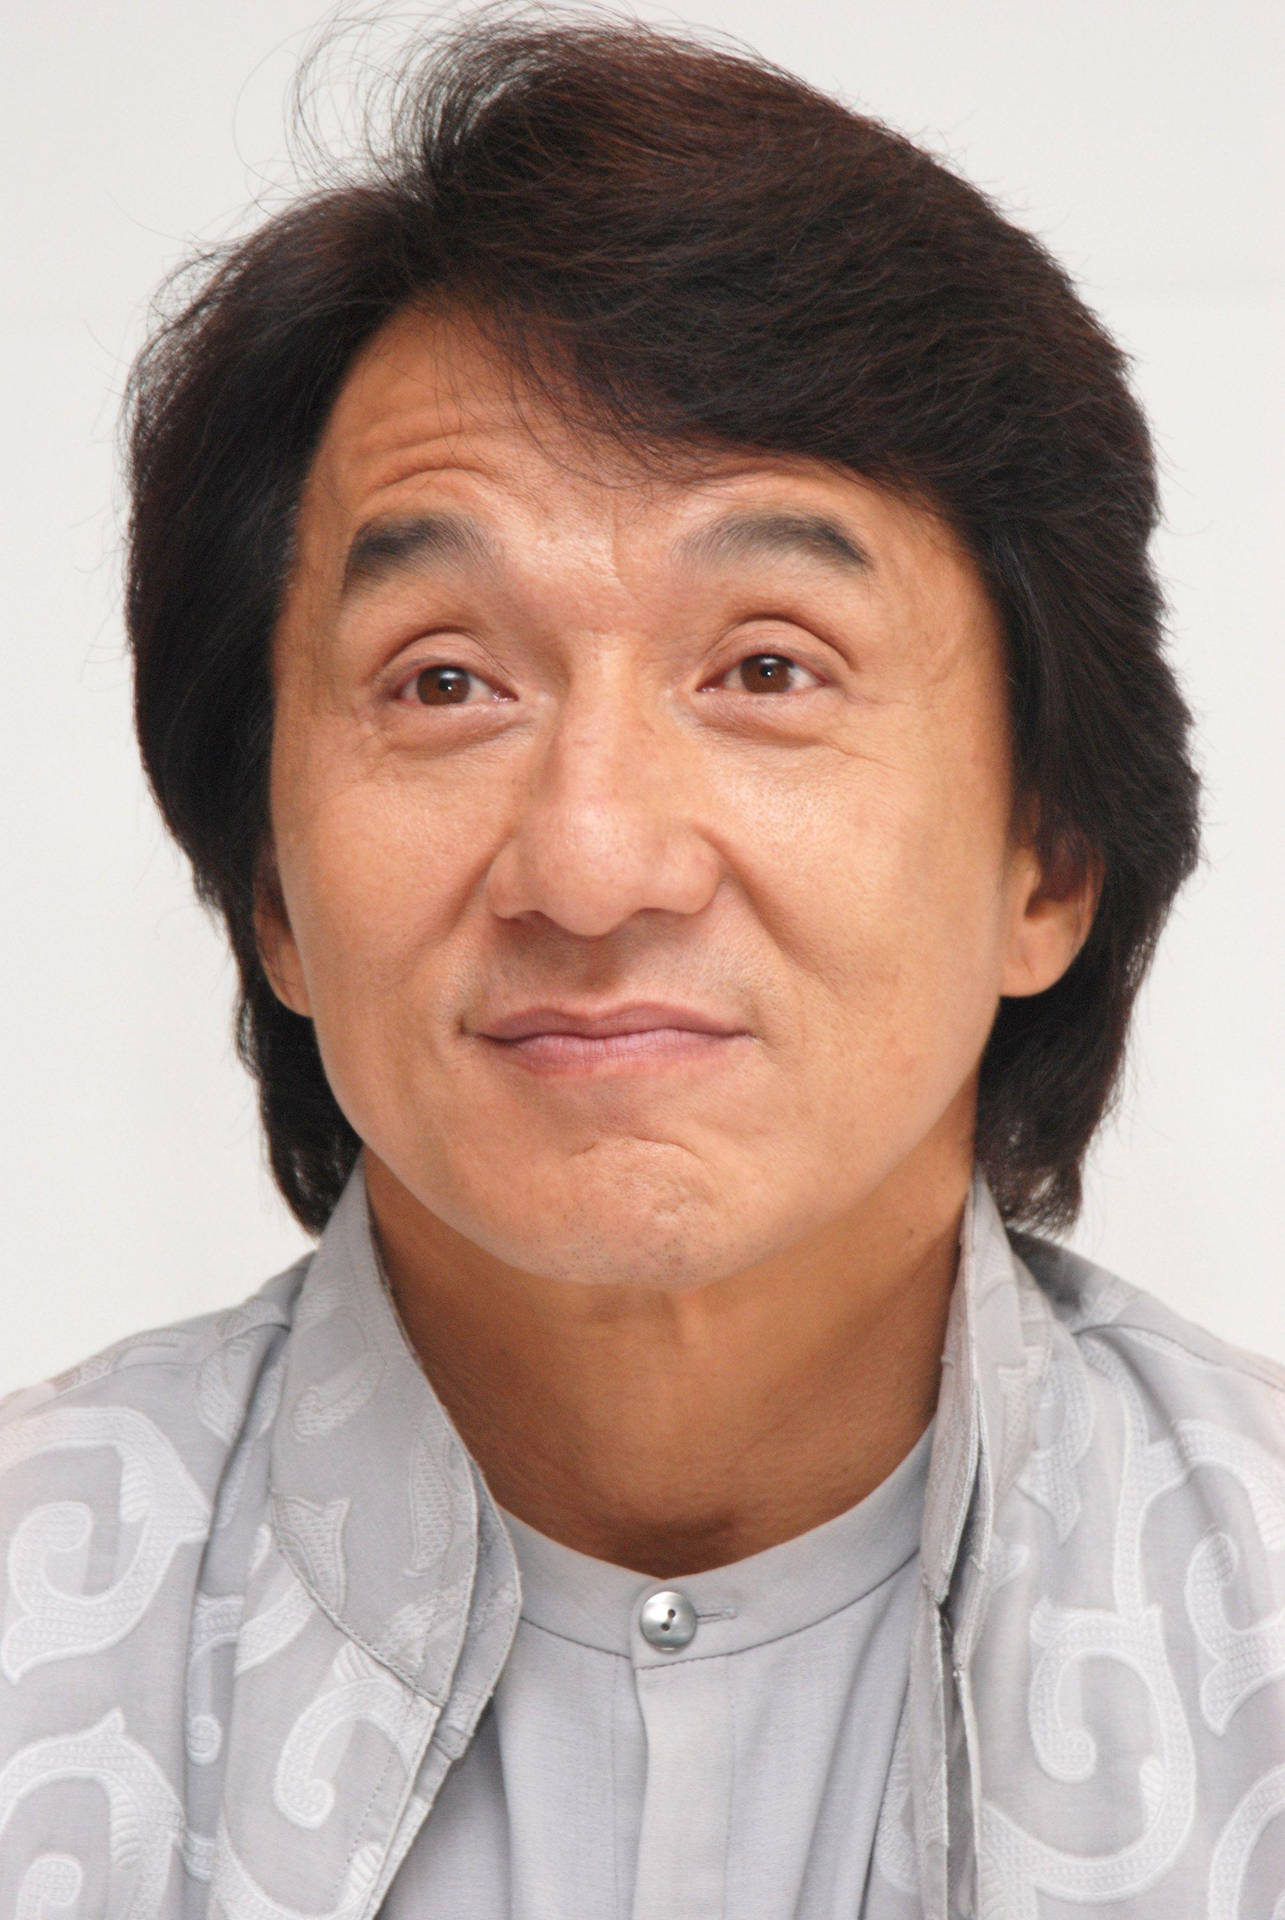 Wallpaper ID 475878  Celebrity Jackie Chan Phone Wallpaper  720x1280  free download